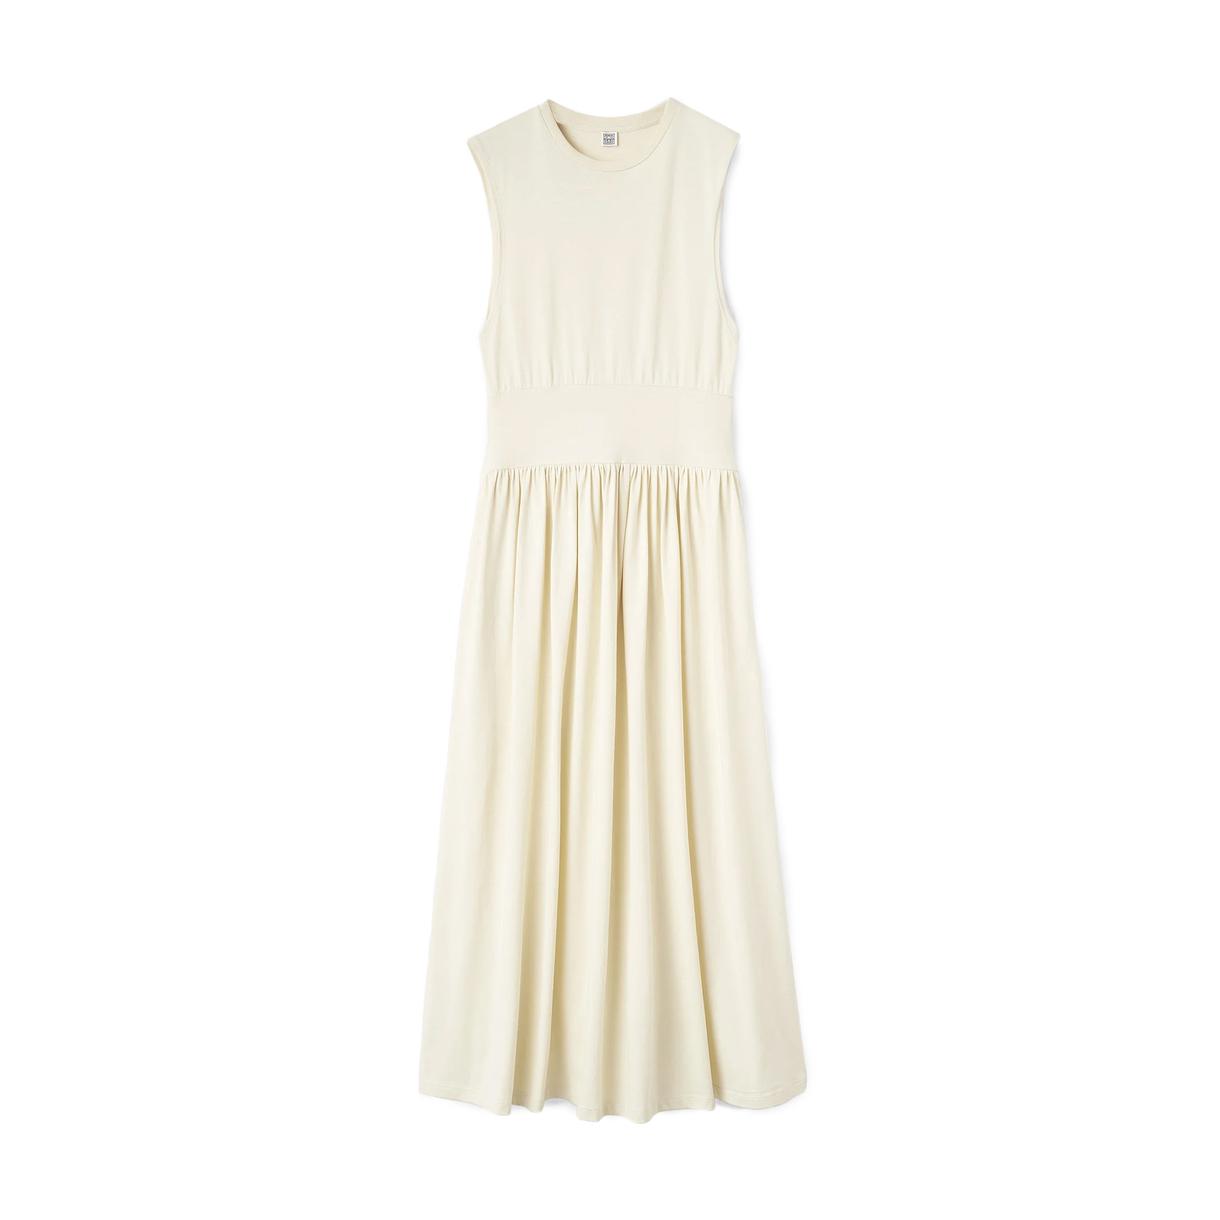 Toteme Sleeveless Cotton Tee Dress | goop